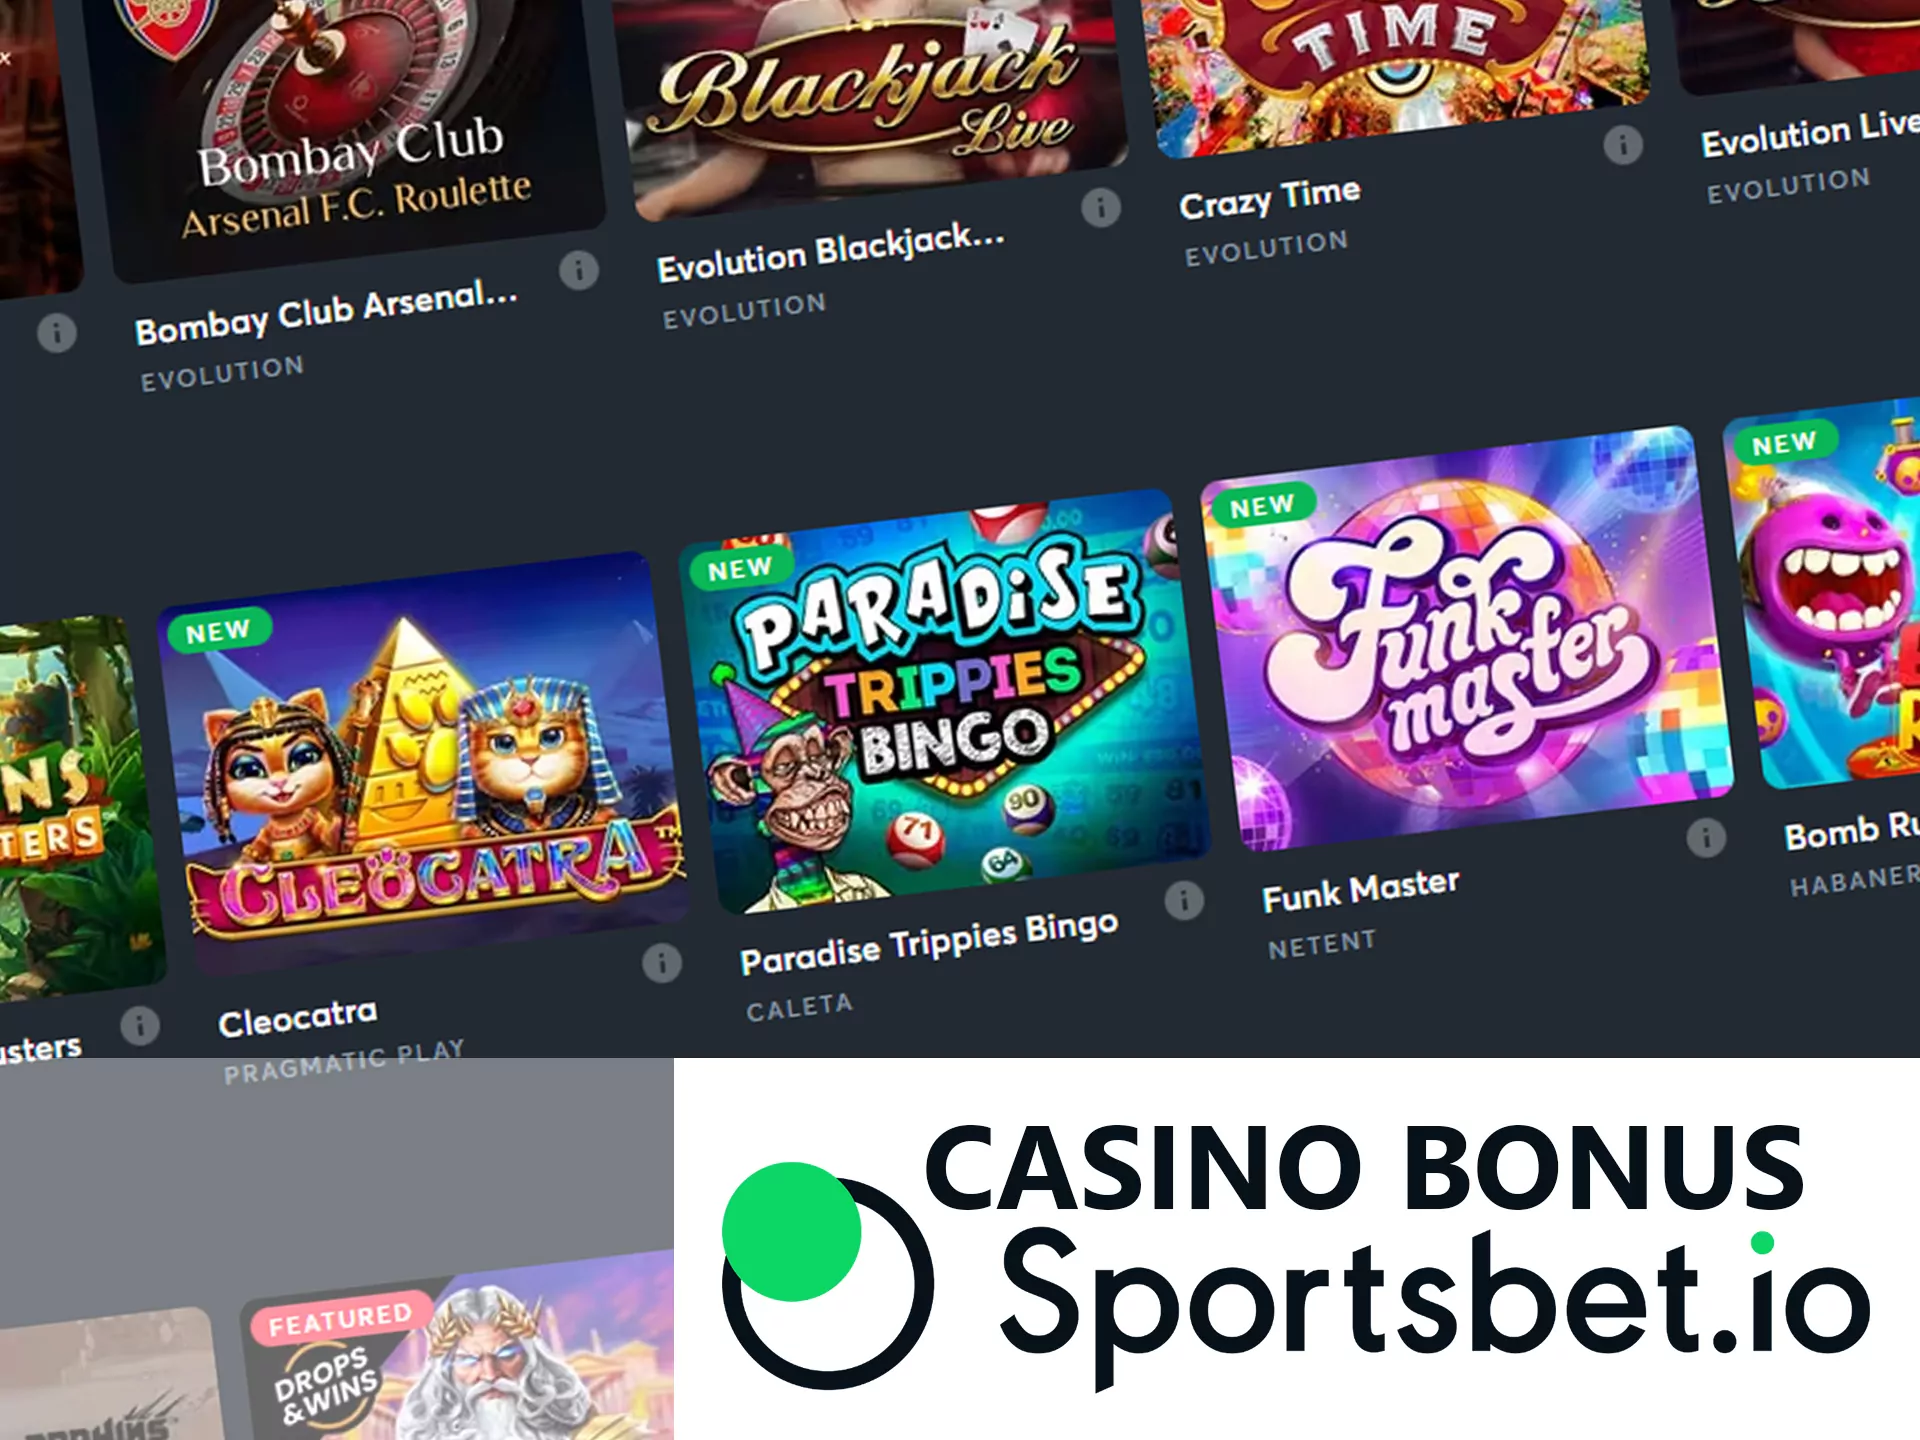 Make a minimal deposit and receive a bonus on casino games.